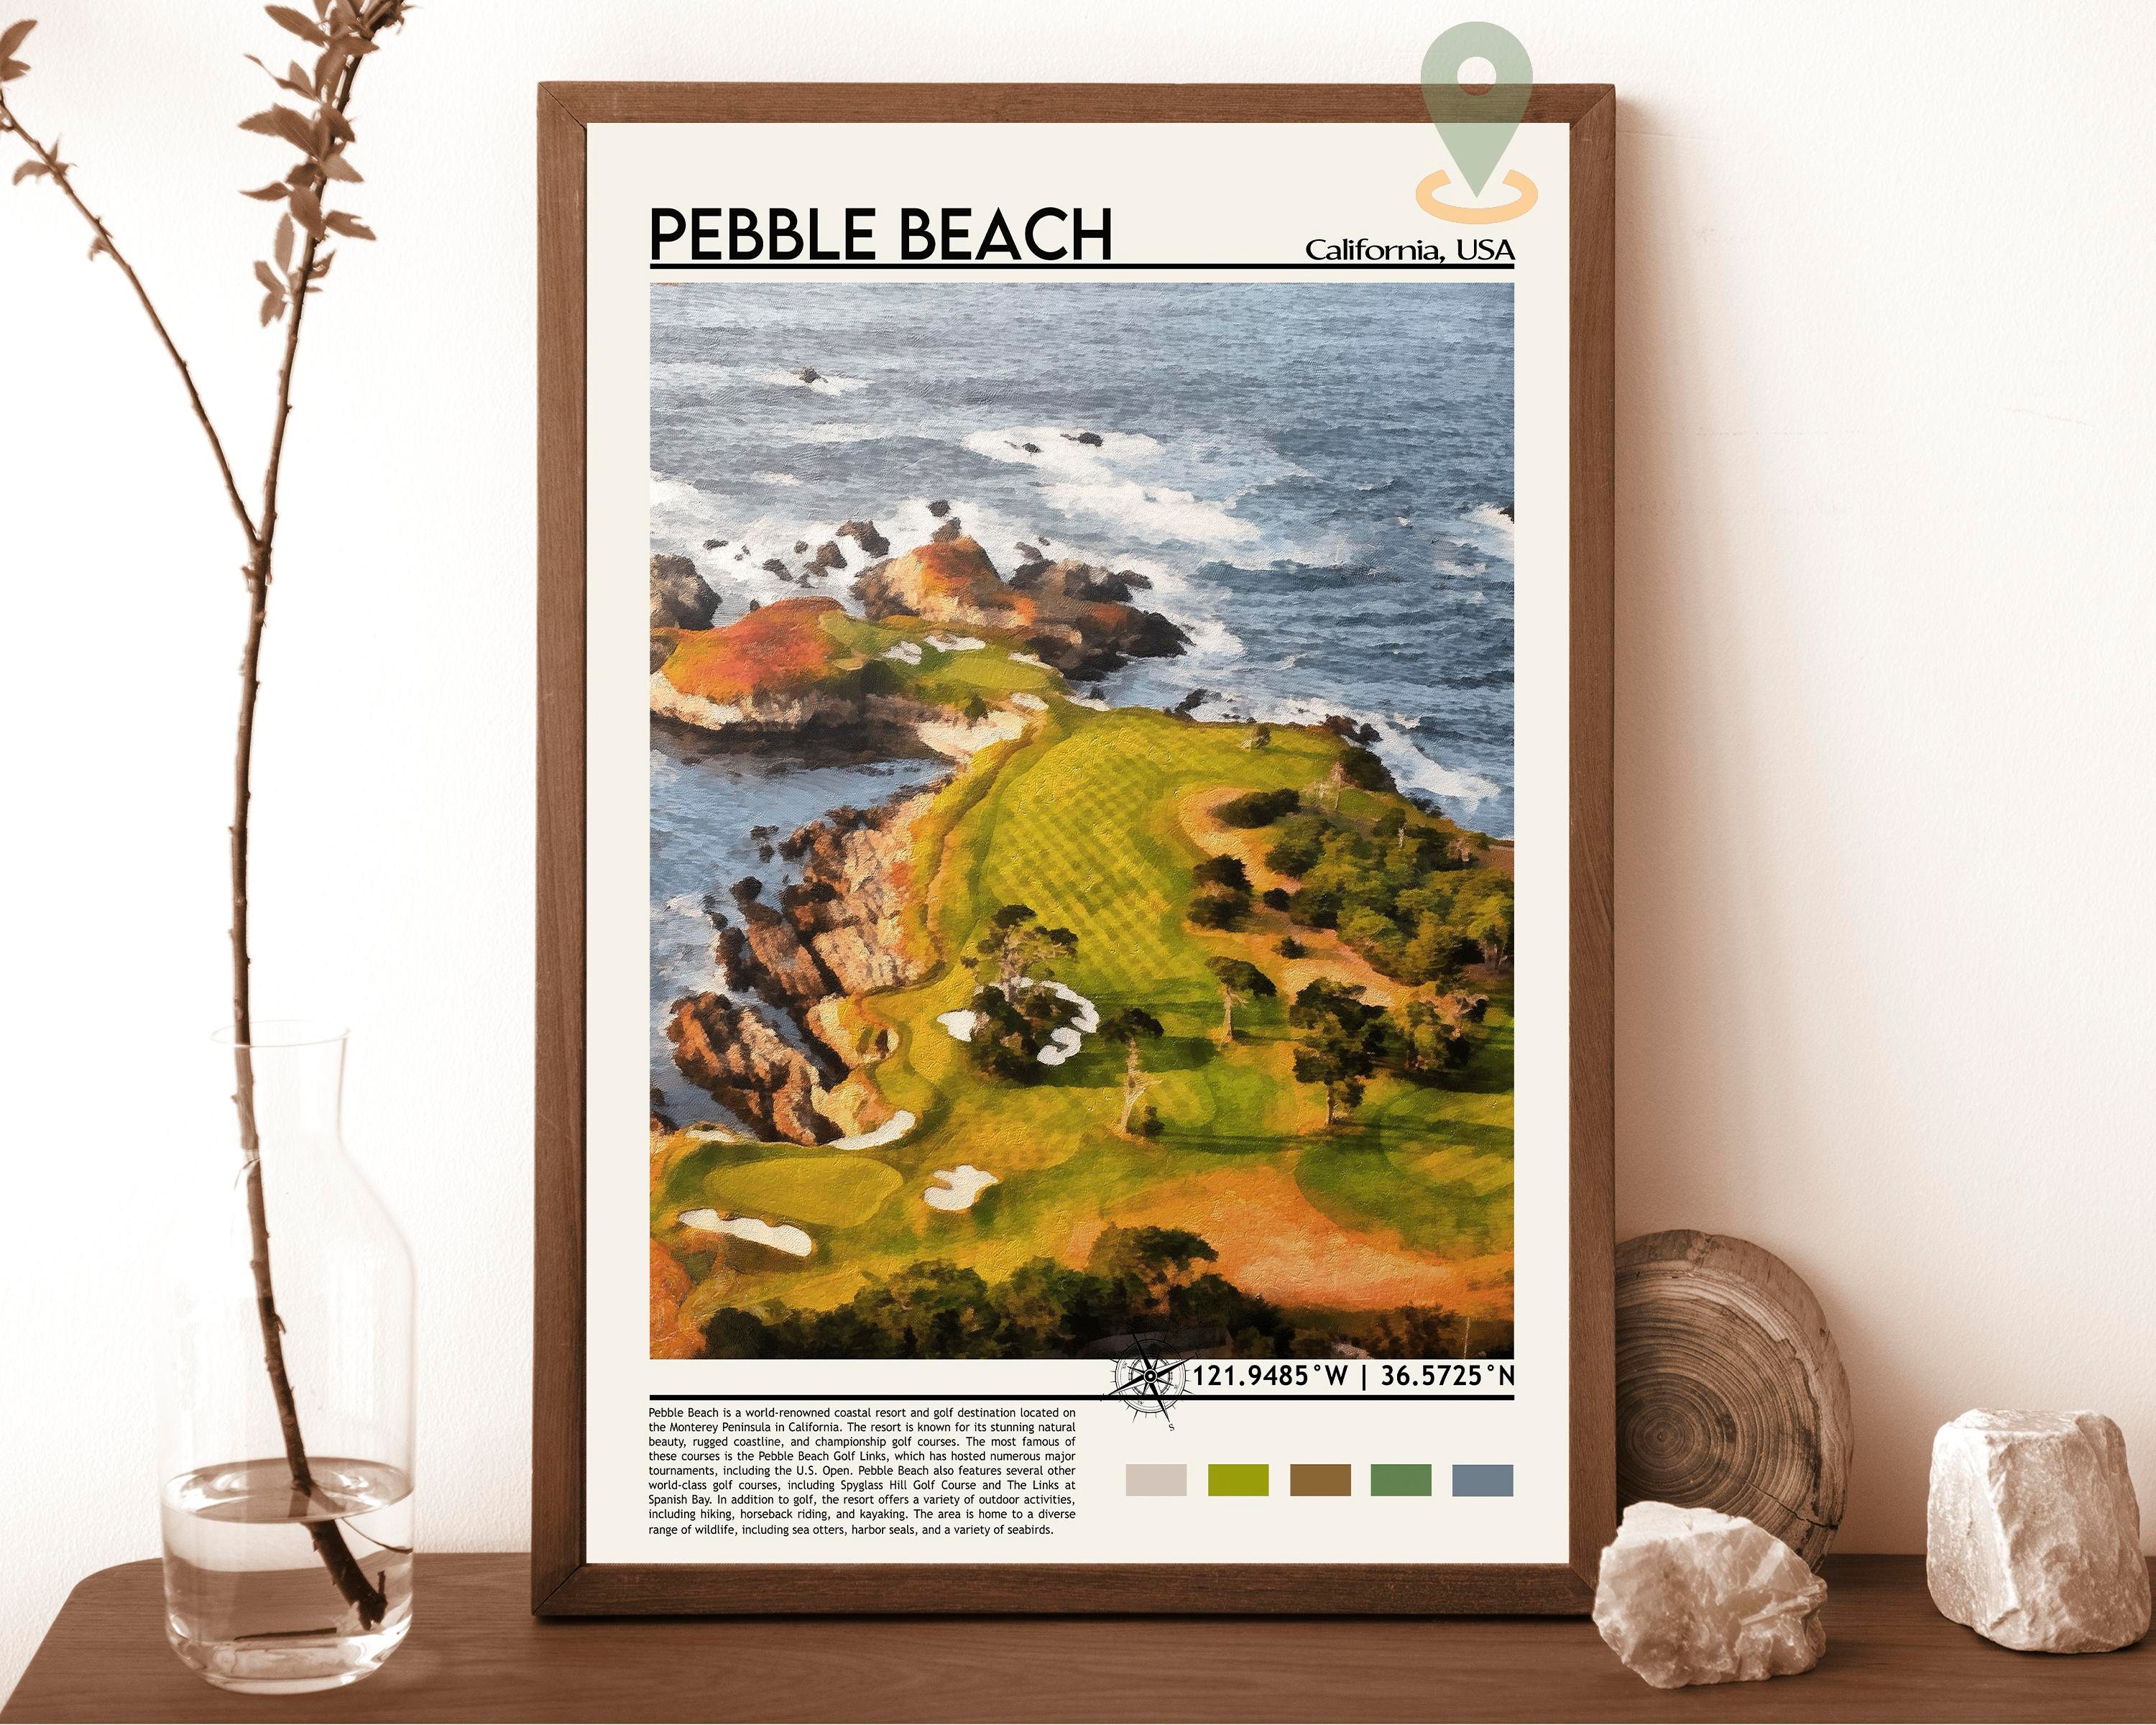 Pebble Beach image